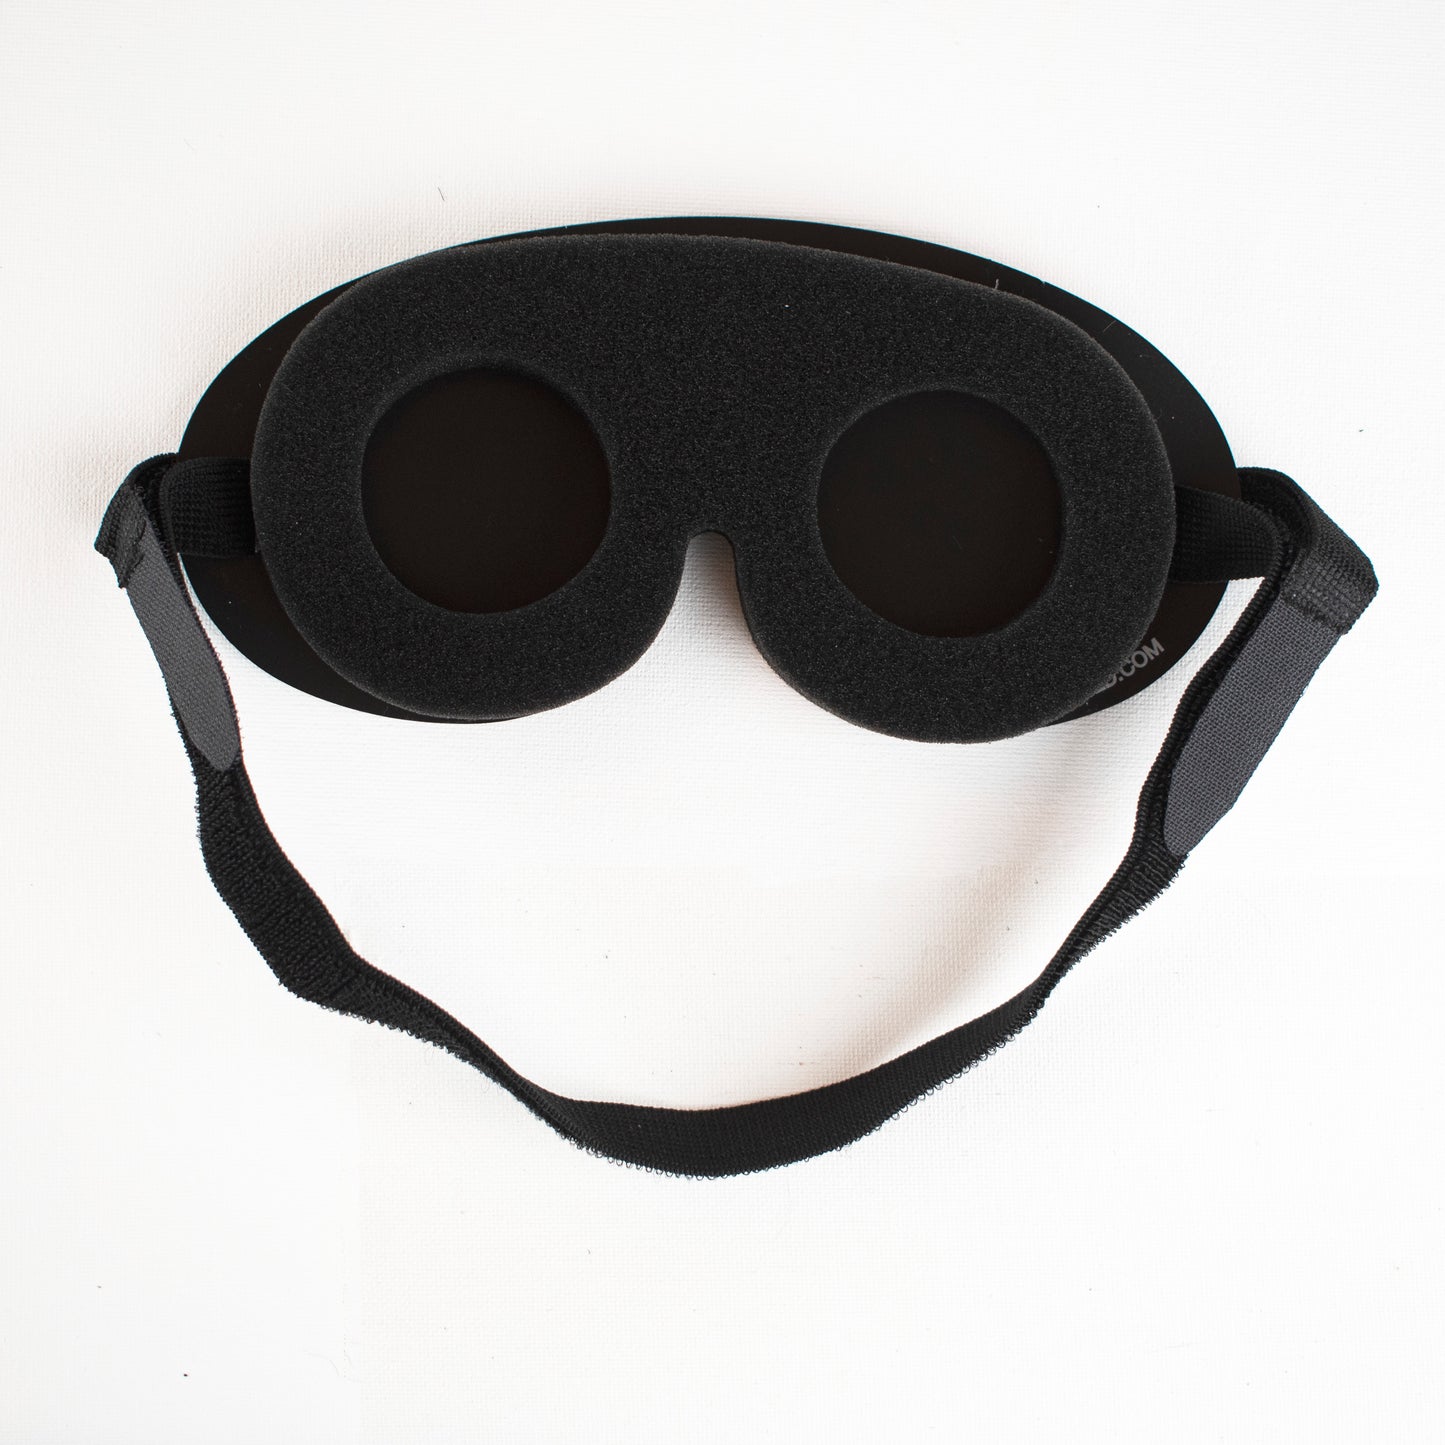 Mindfold – Sensory Deprivation Mask – Blindfold